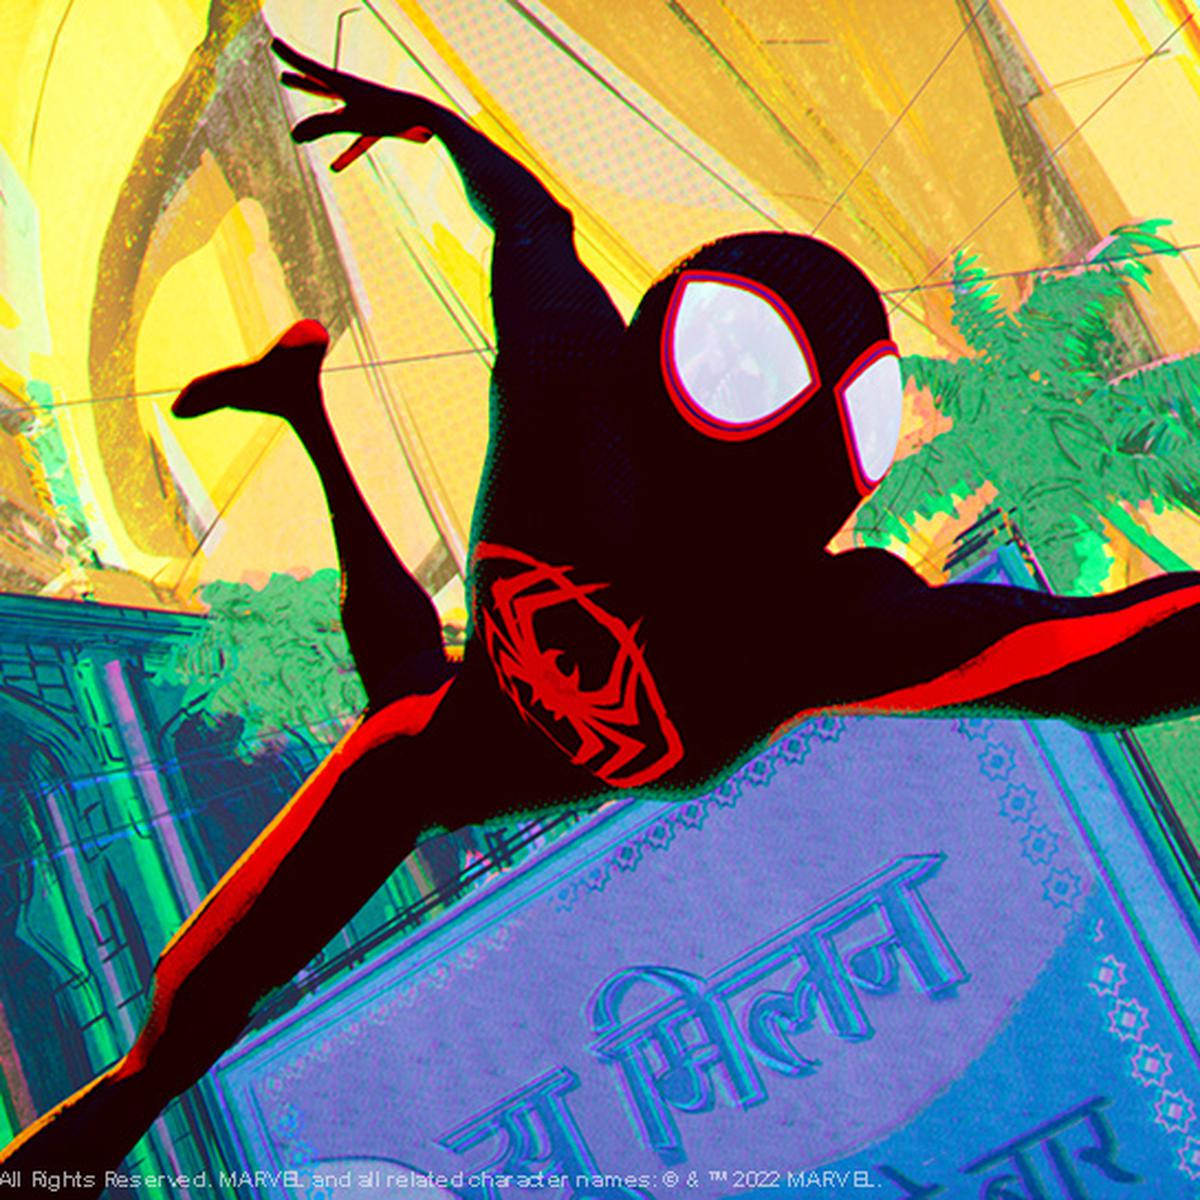 Spider-Man Noir Series Still in the Works With The Punisher Showrunner